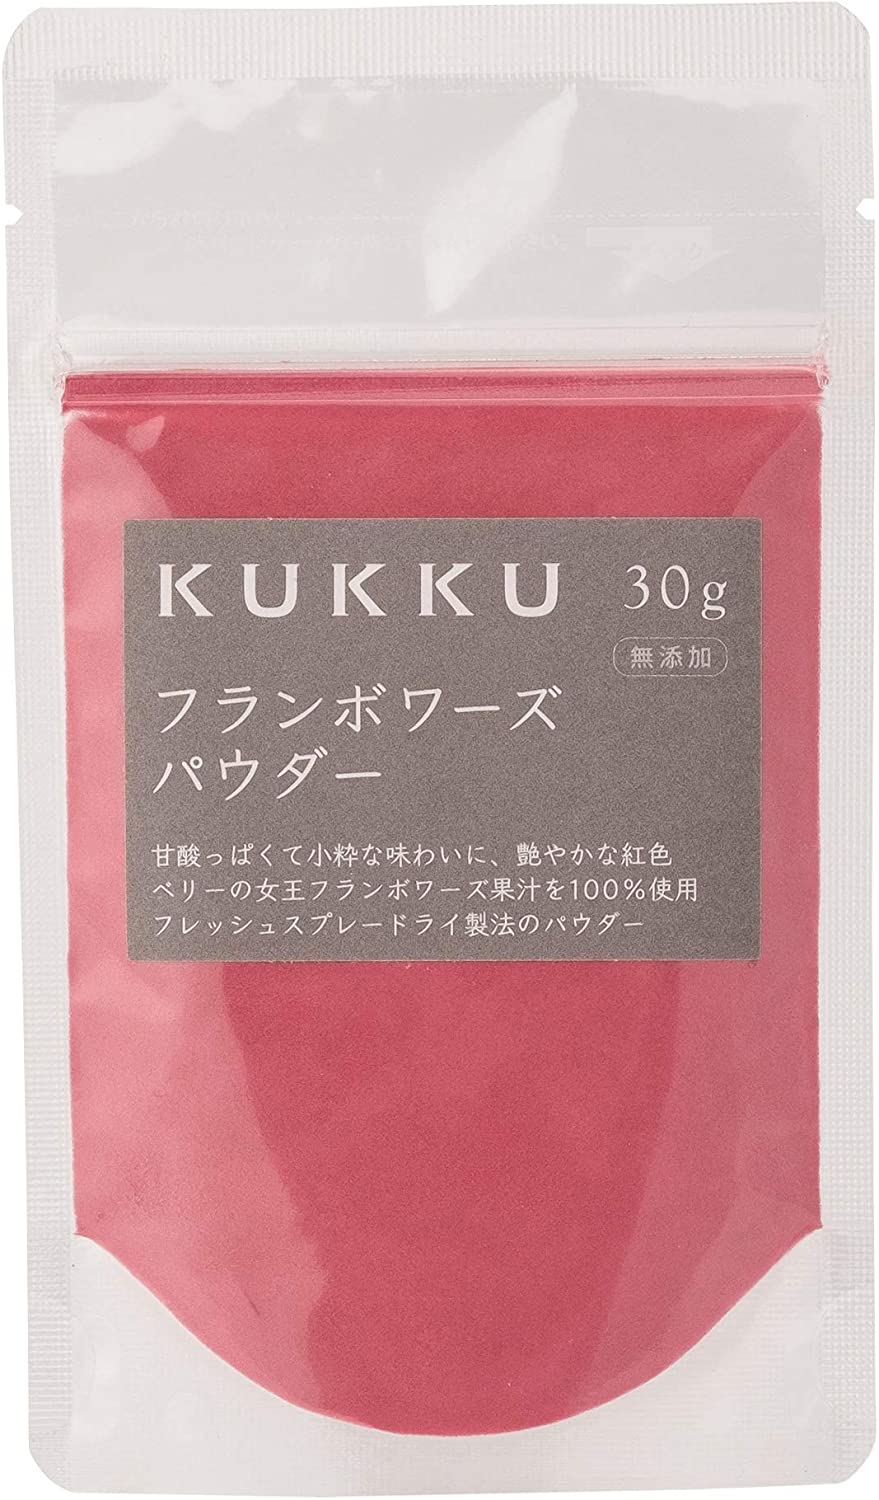 KUKKU Franboise (Raspberry) powder 30g Additive-free fruit powder